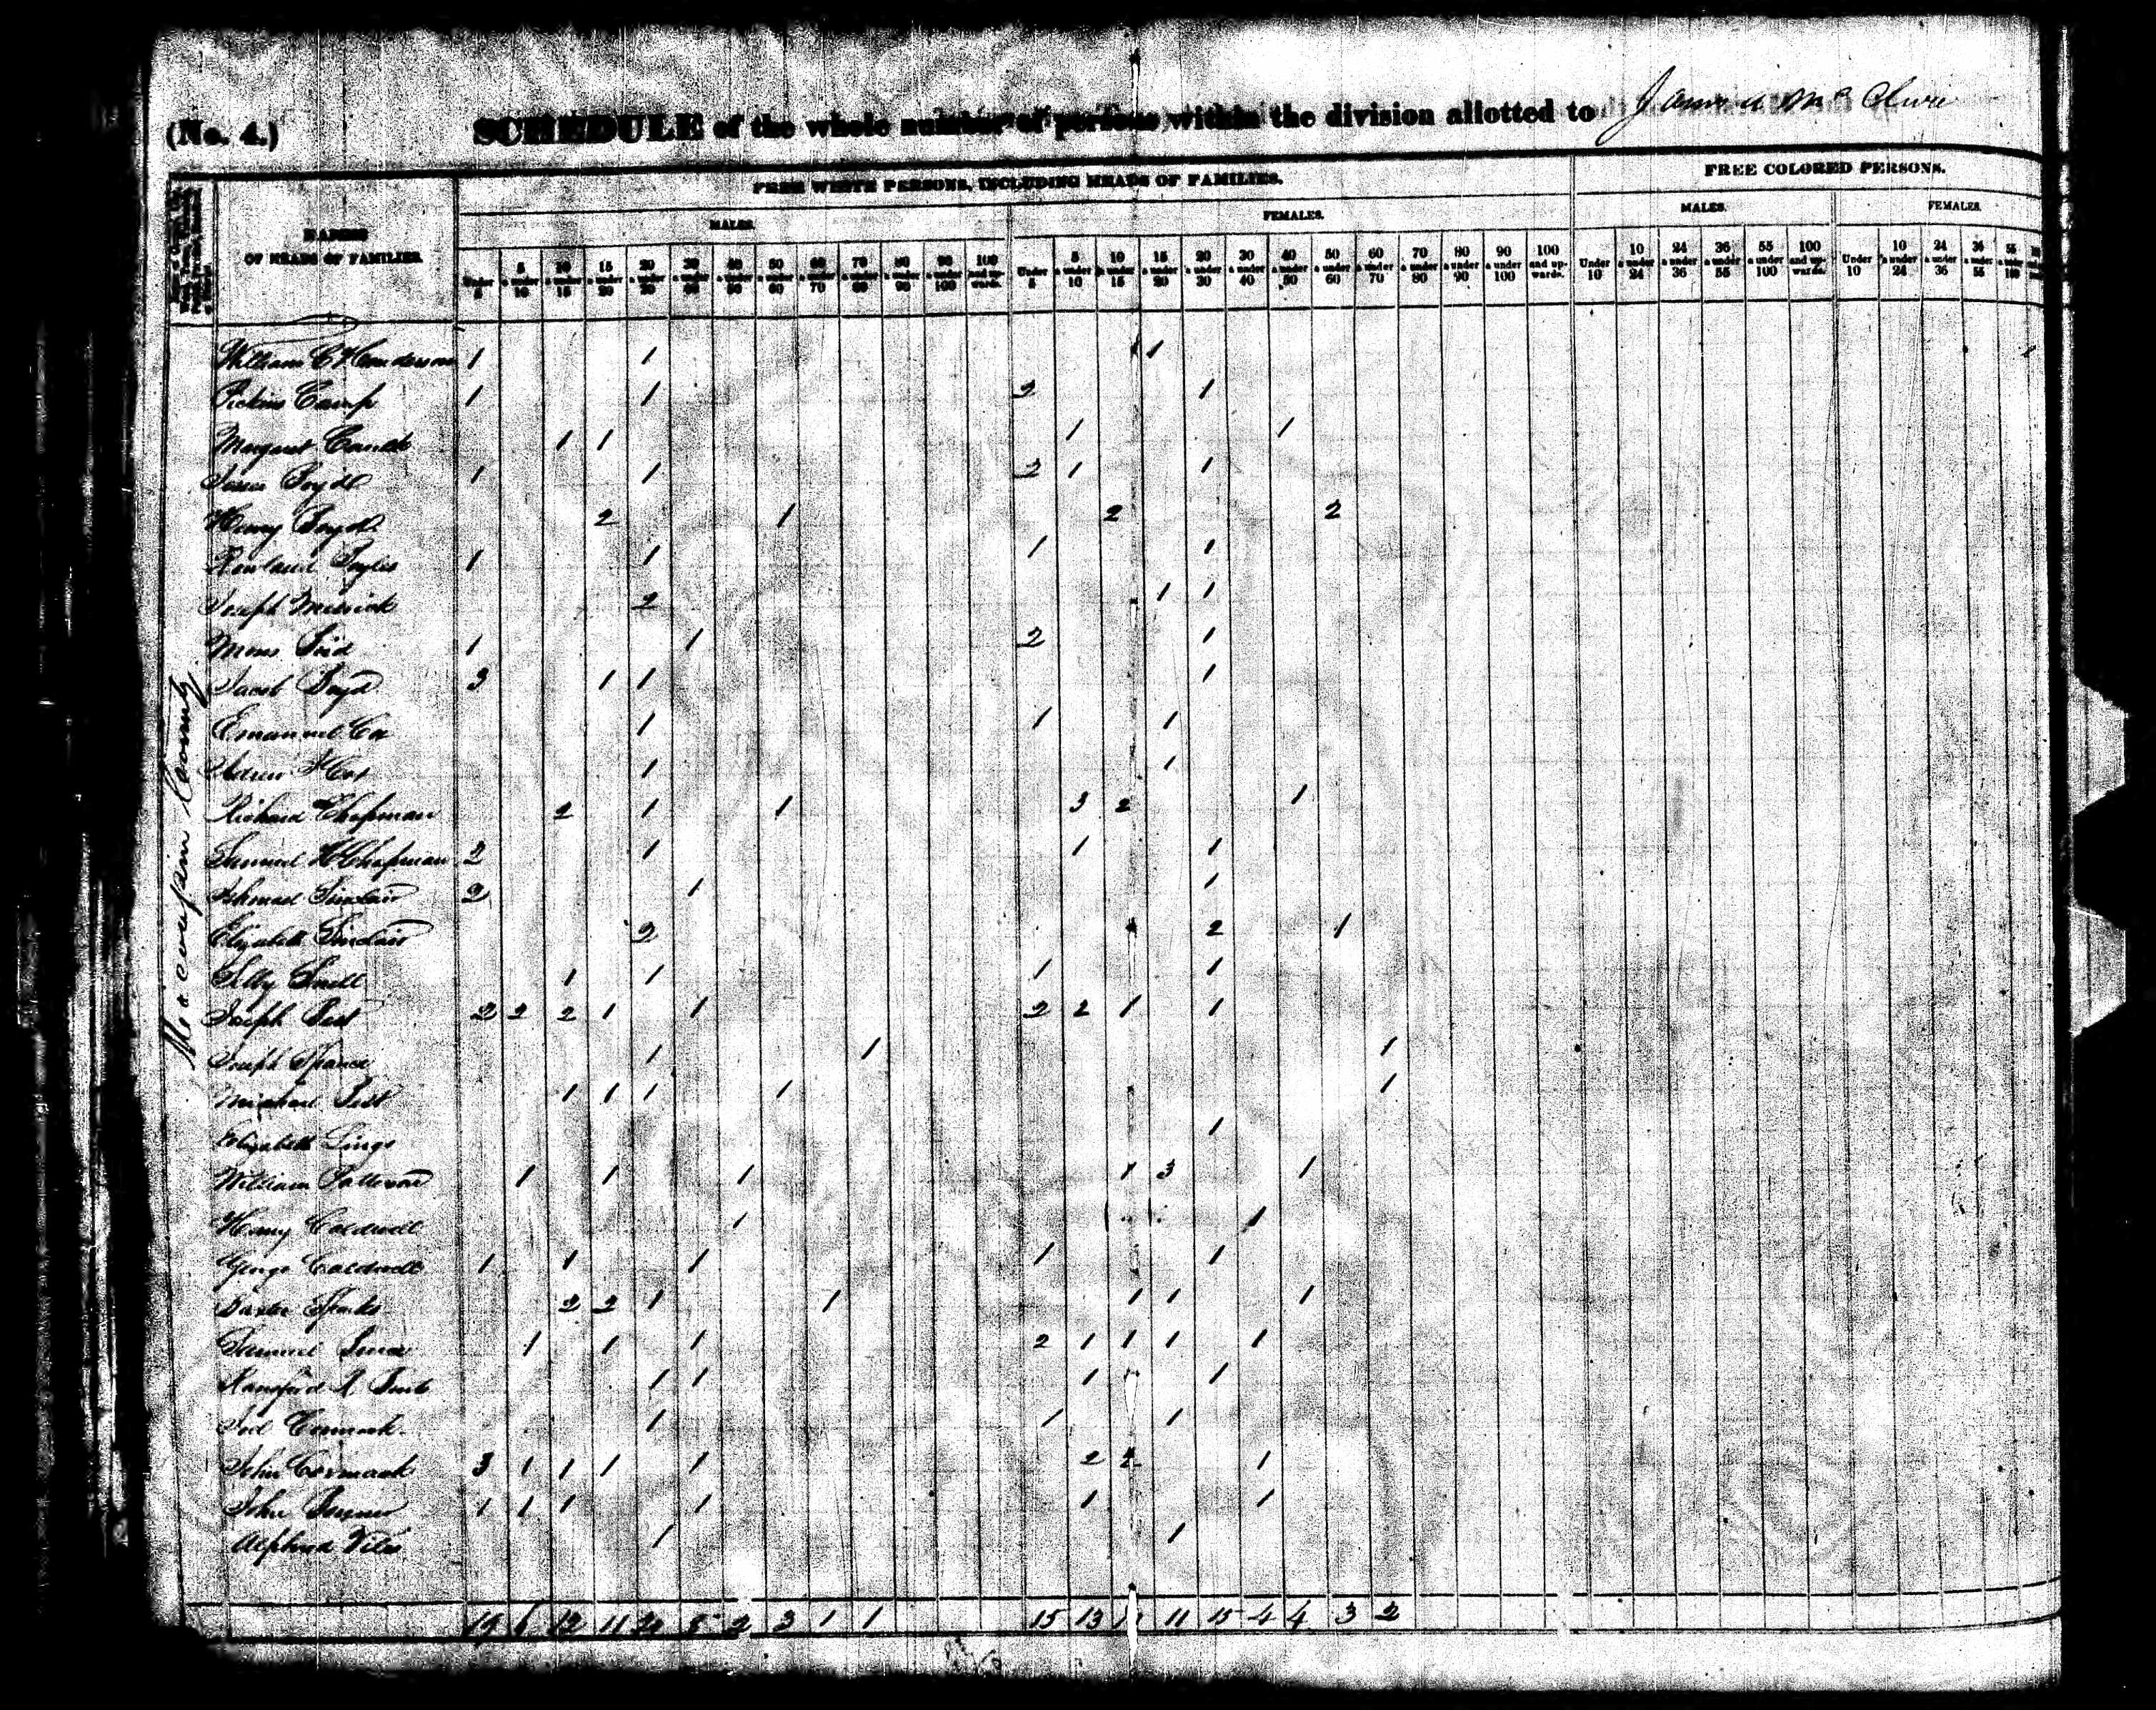 Joseph Best, 1840 Macoupin County, Missouri, census